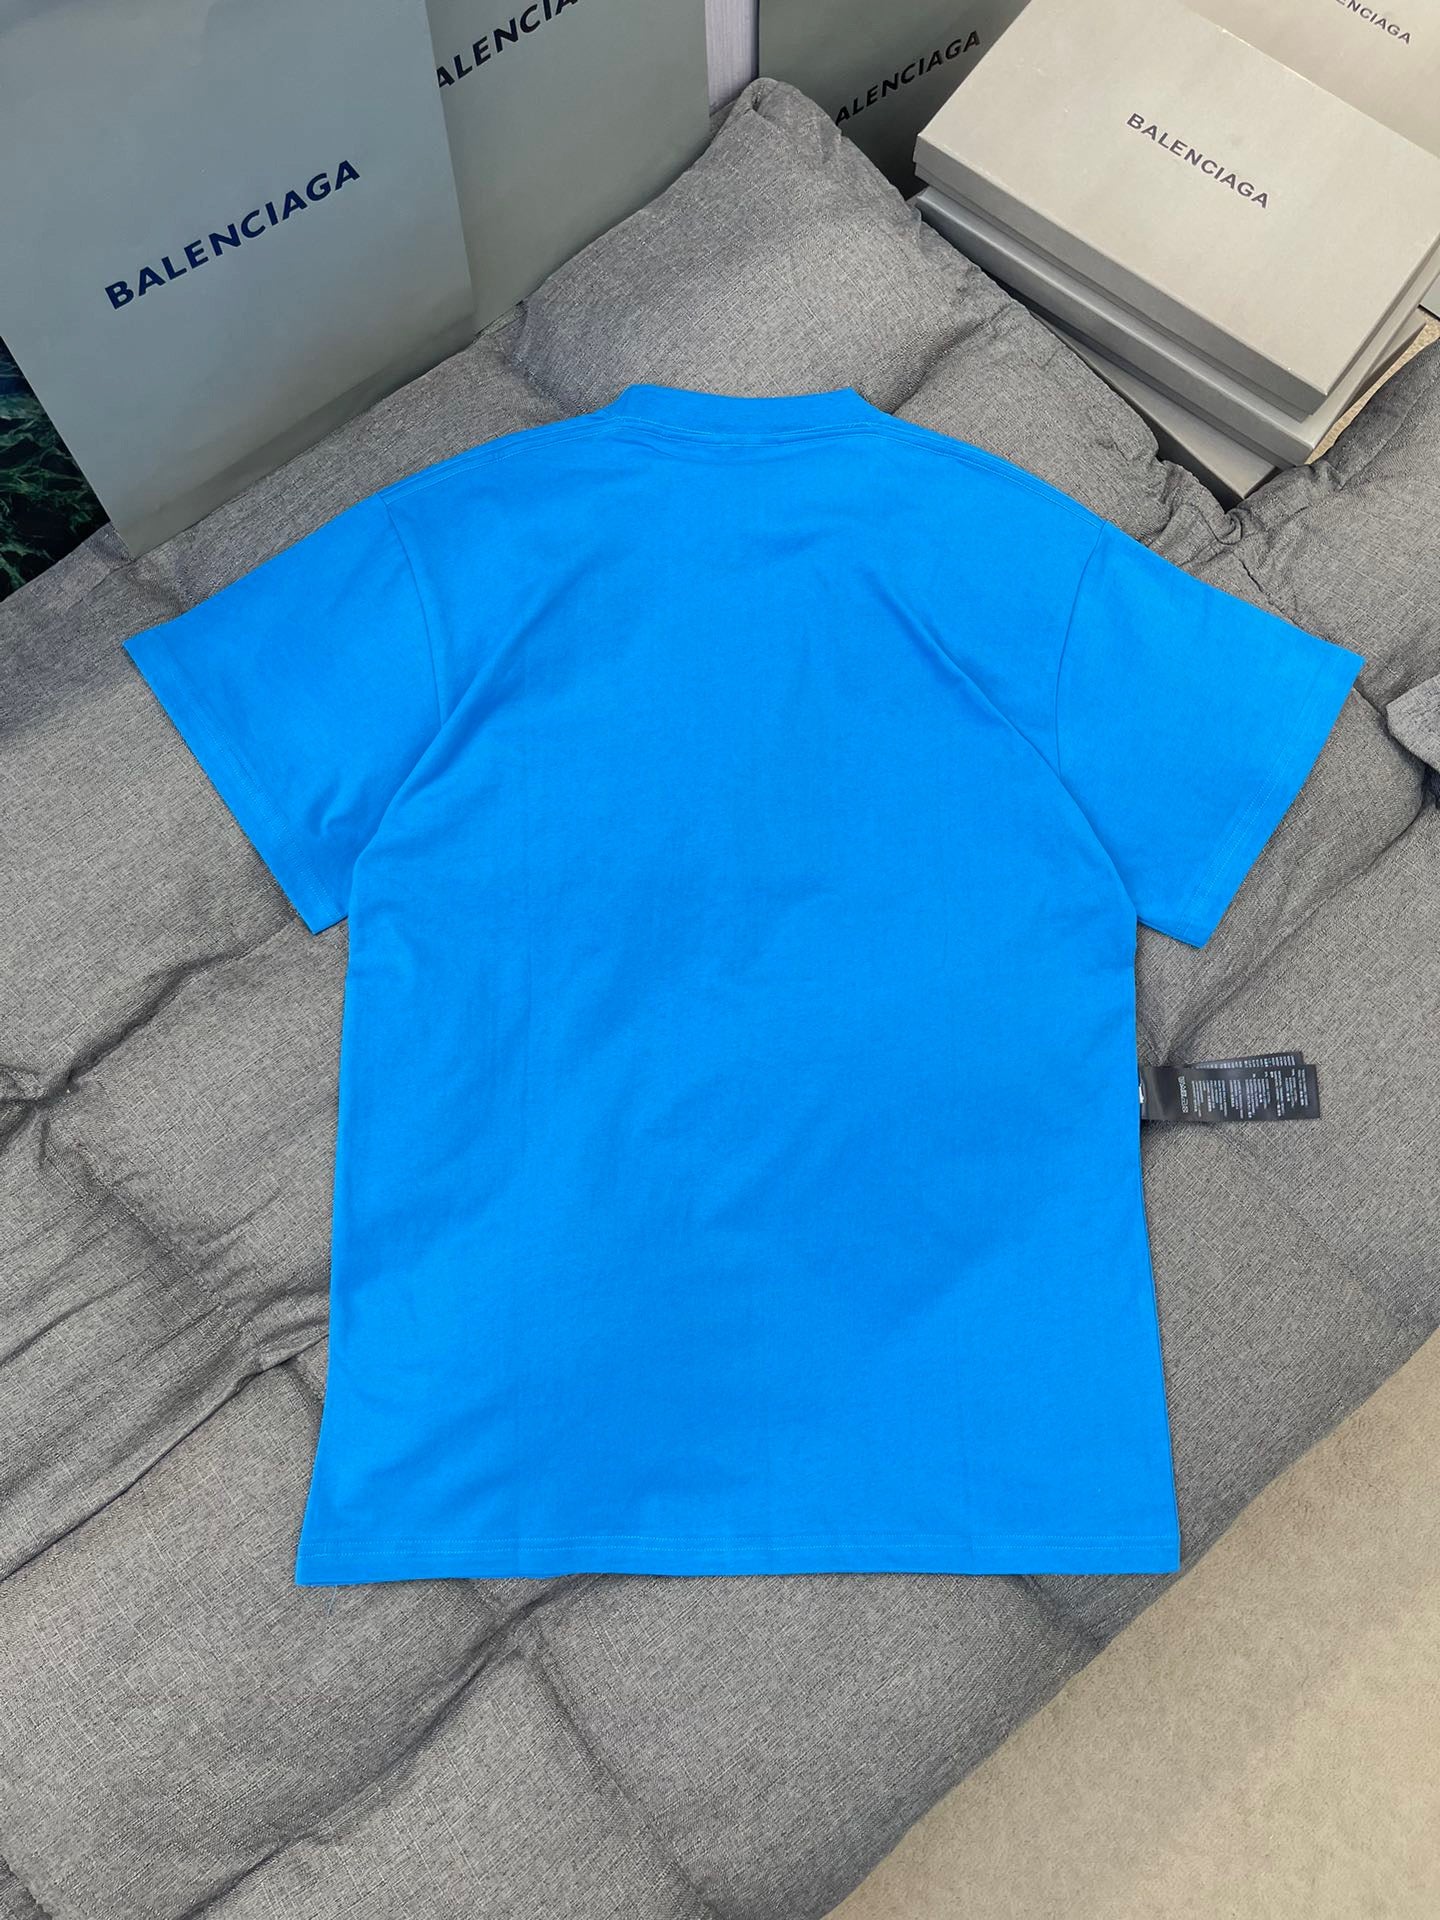 Sky blue, White and Blue T-shirt